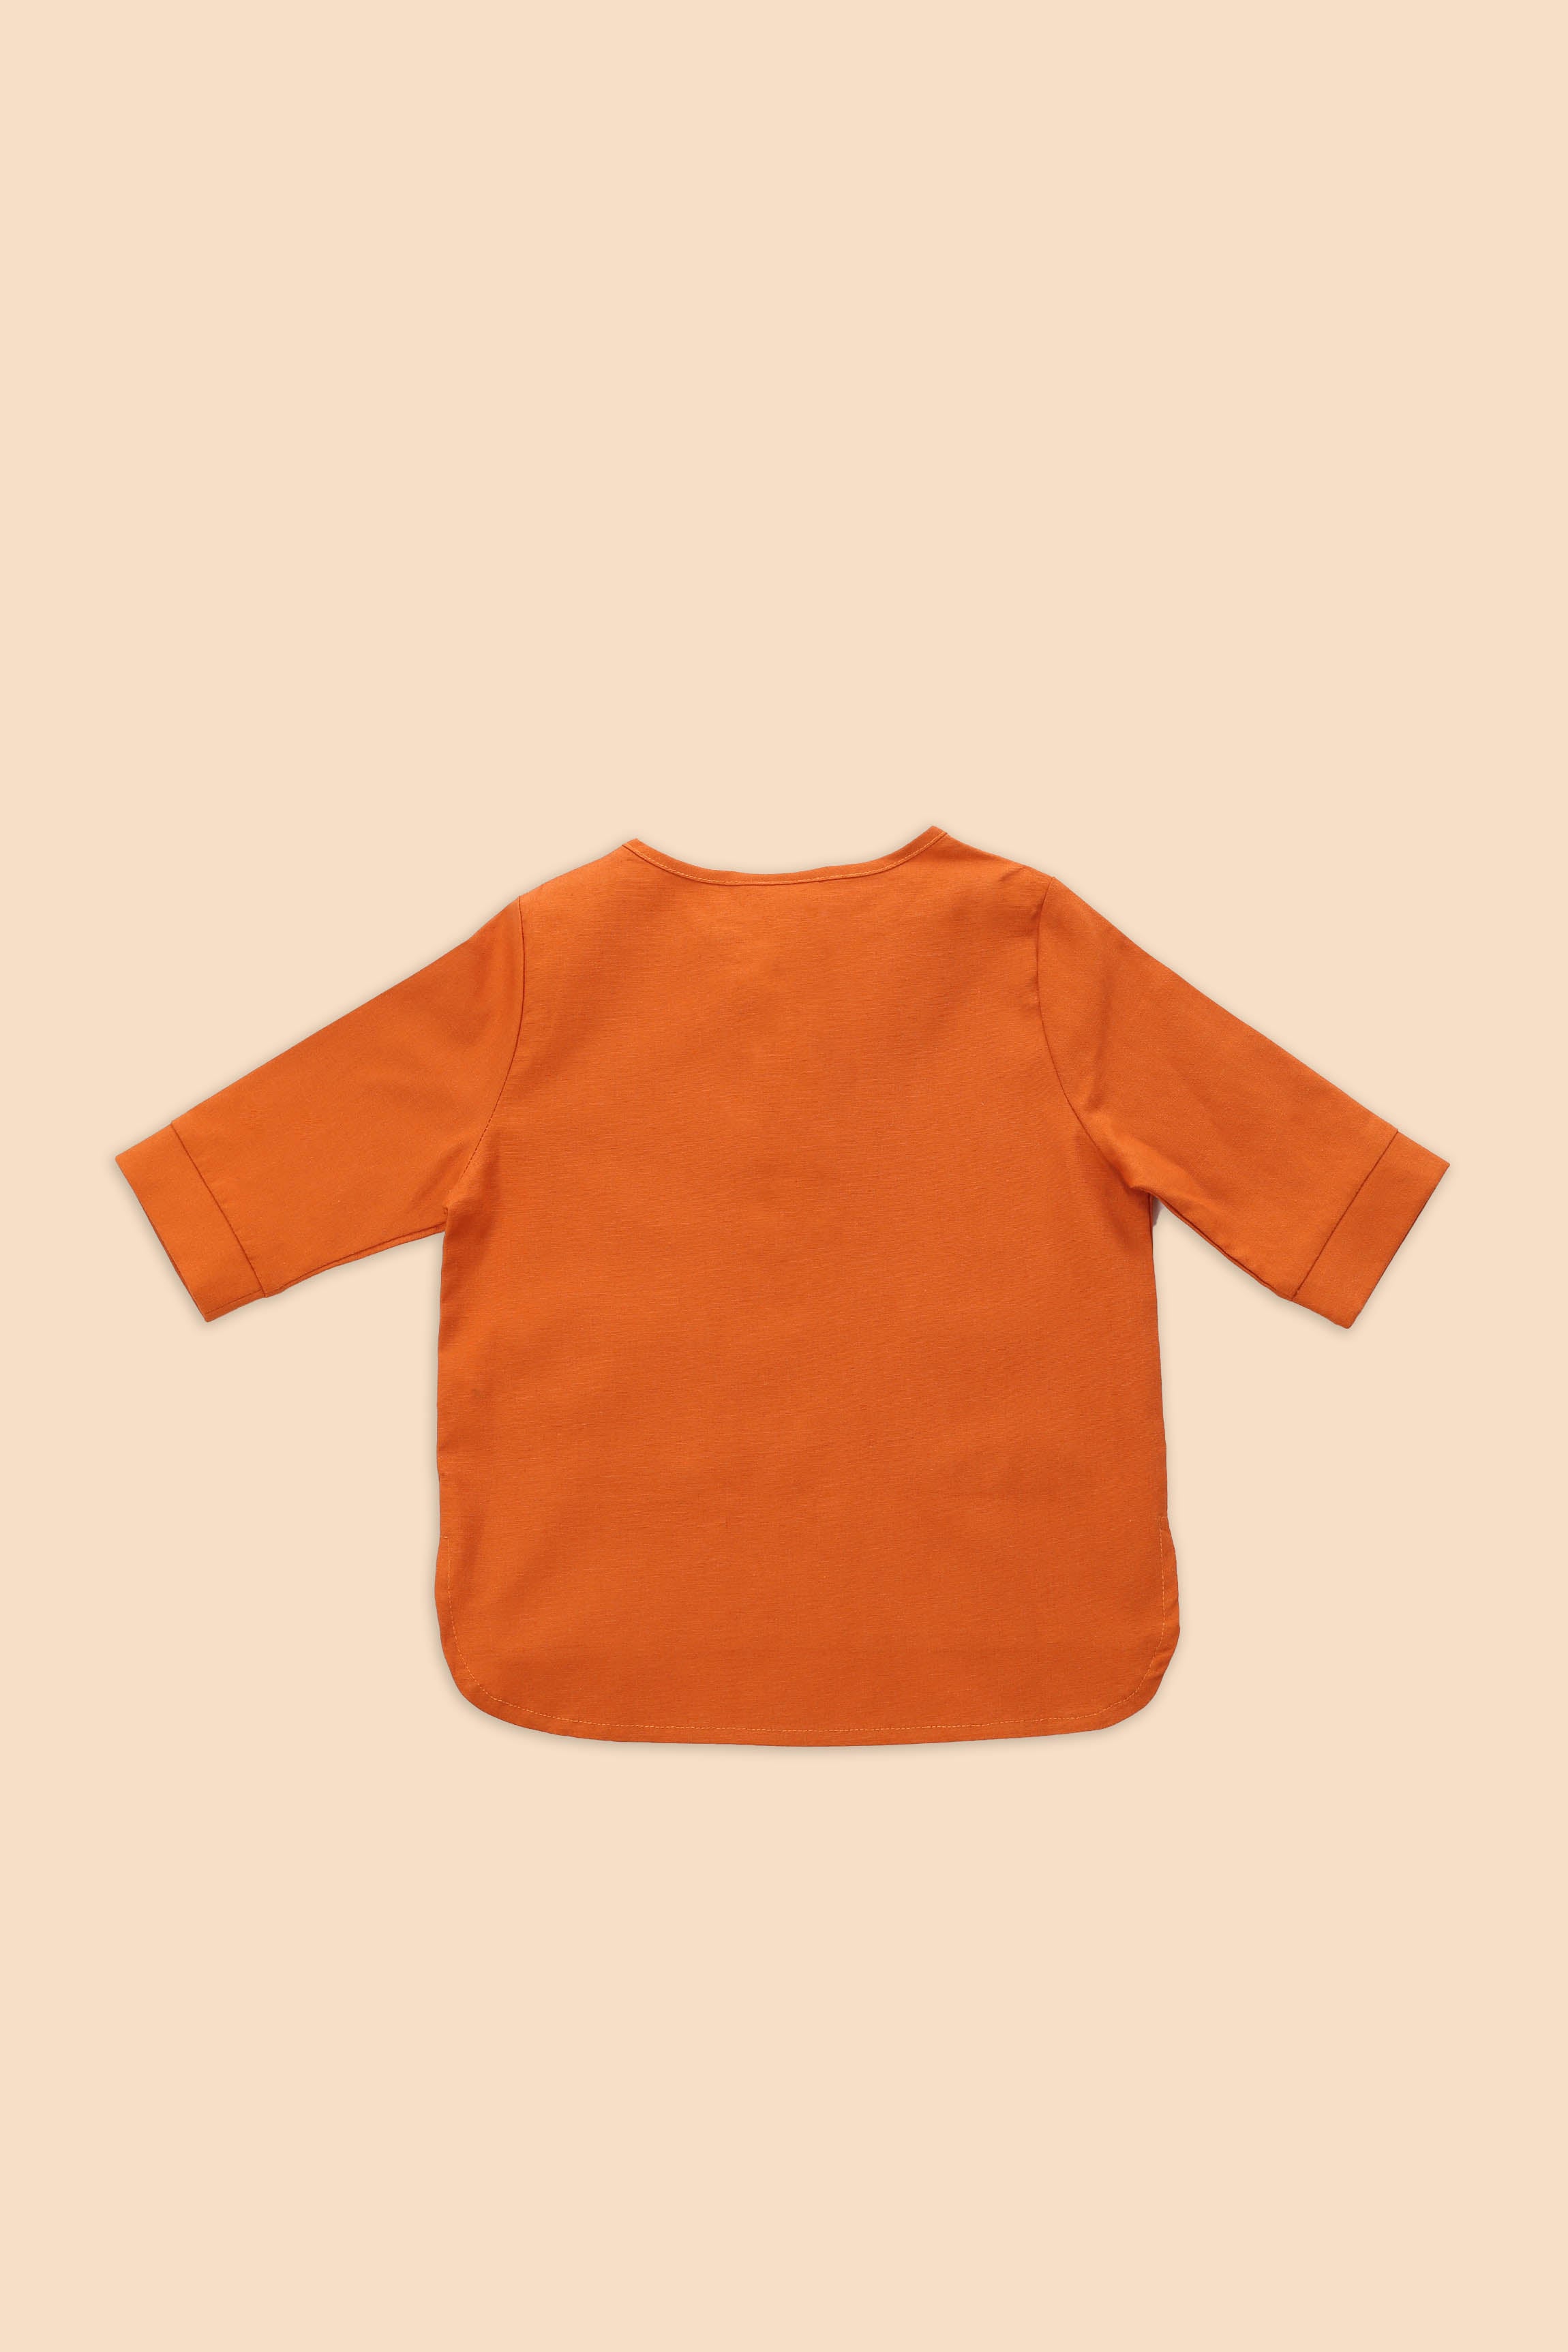 The Matahari Pair Pockets Kurta Top Orange